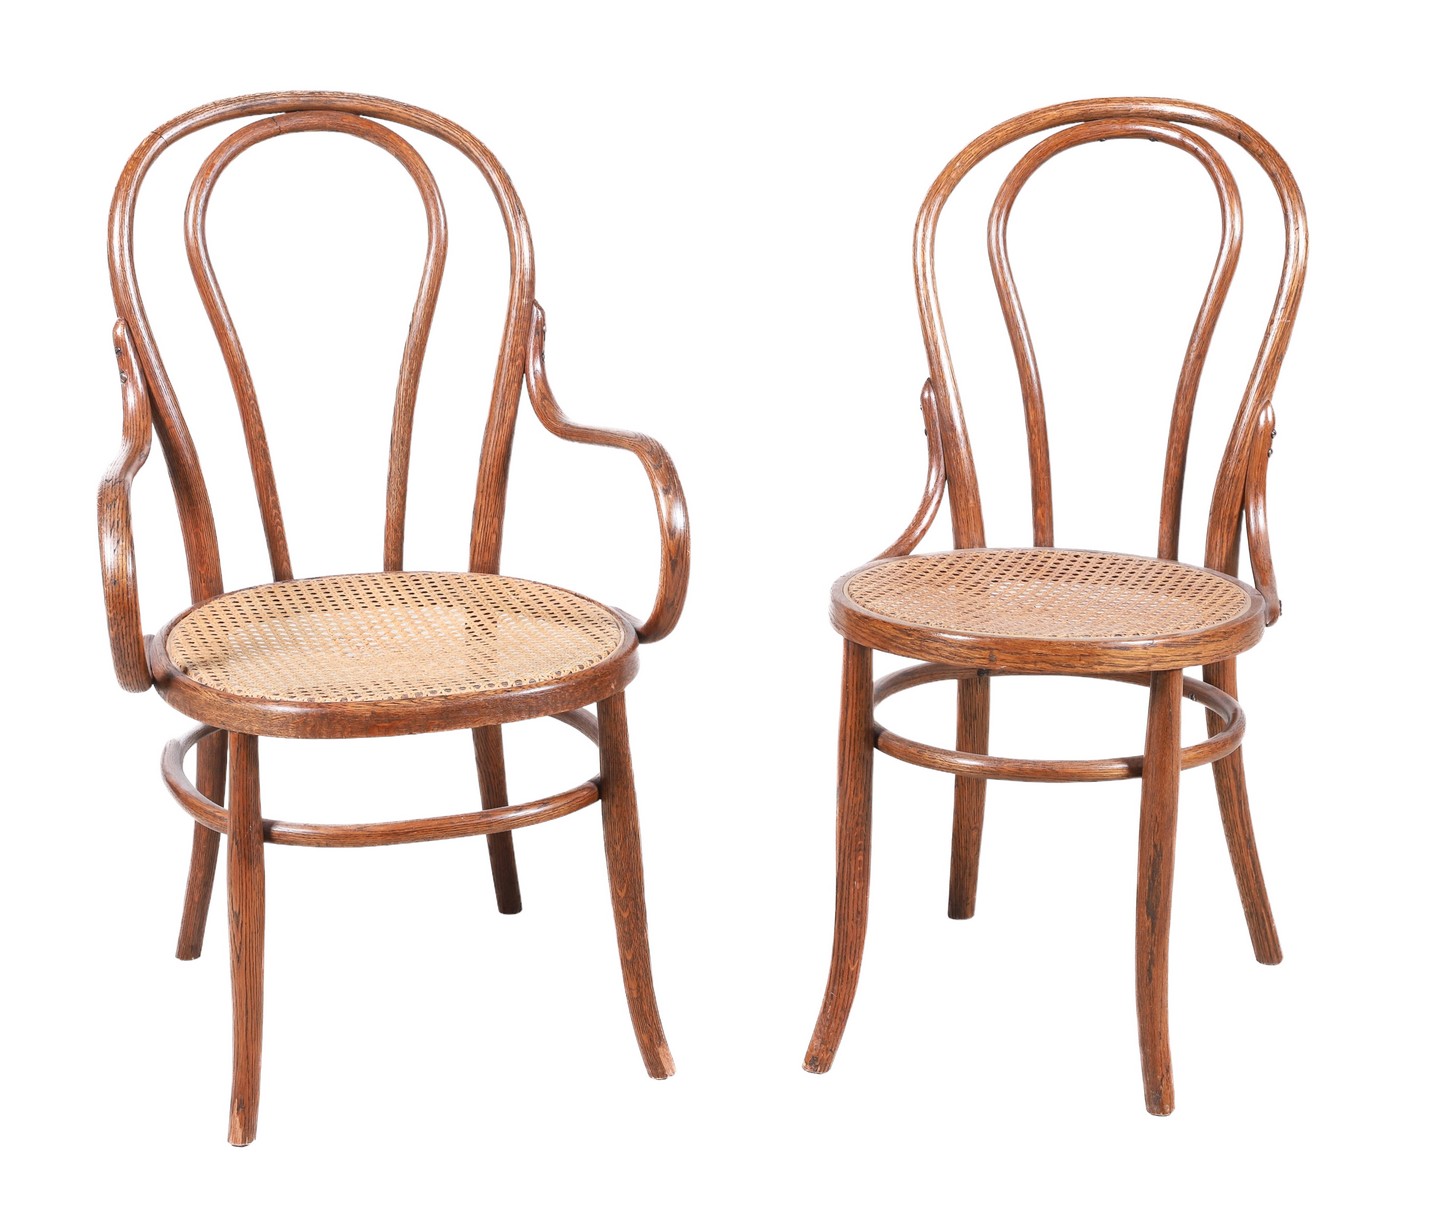  2 Thonet style oak bentwood chairs  27a51b